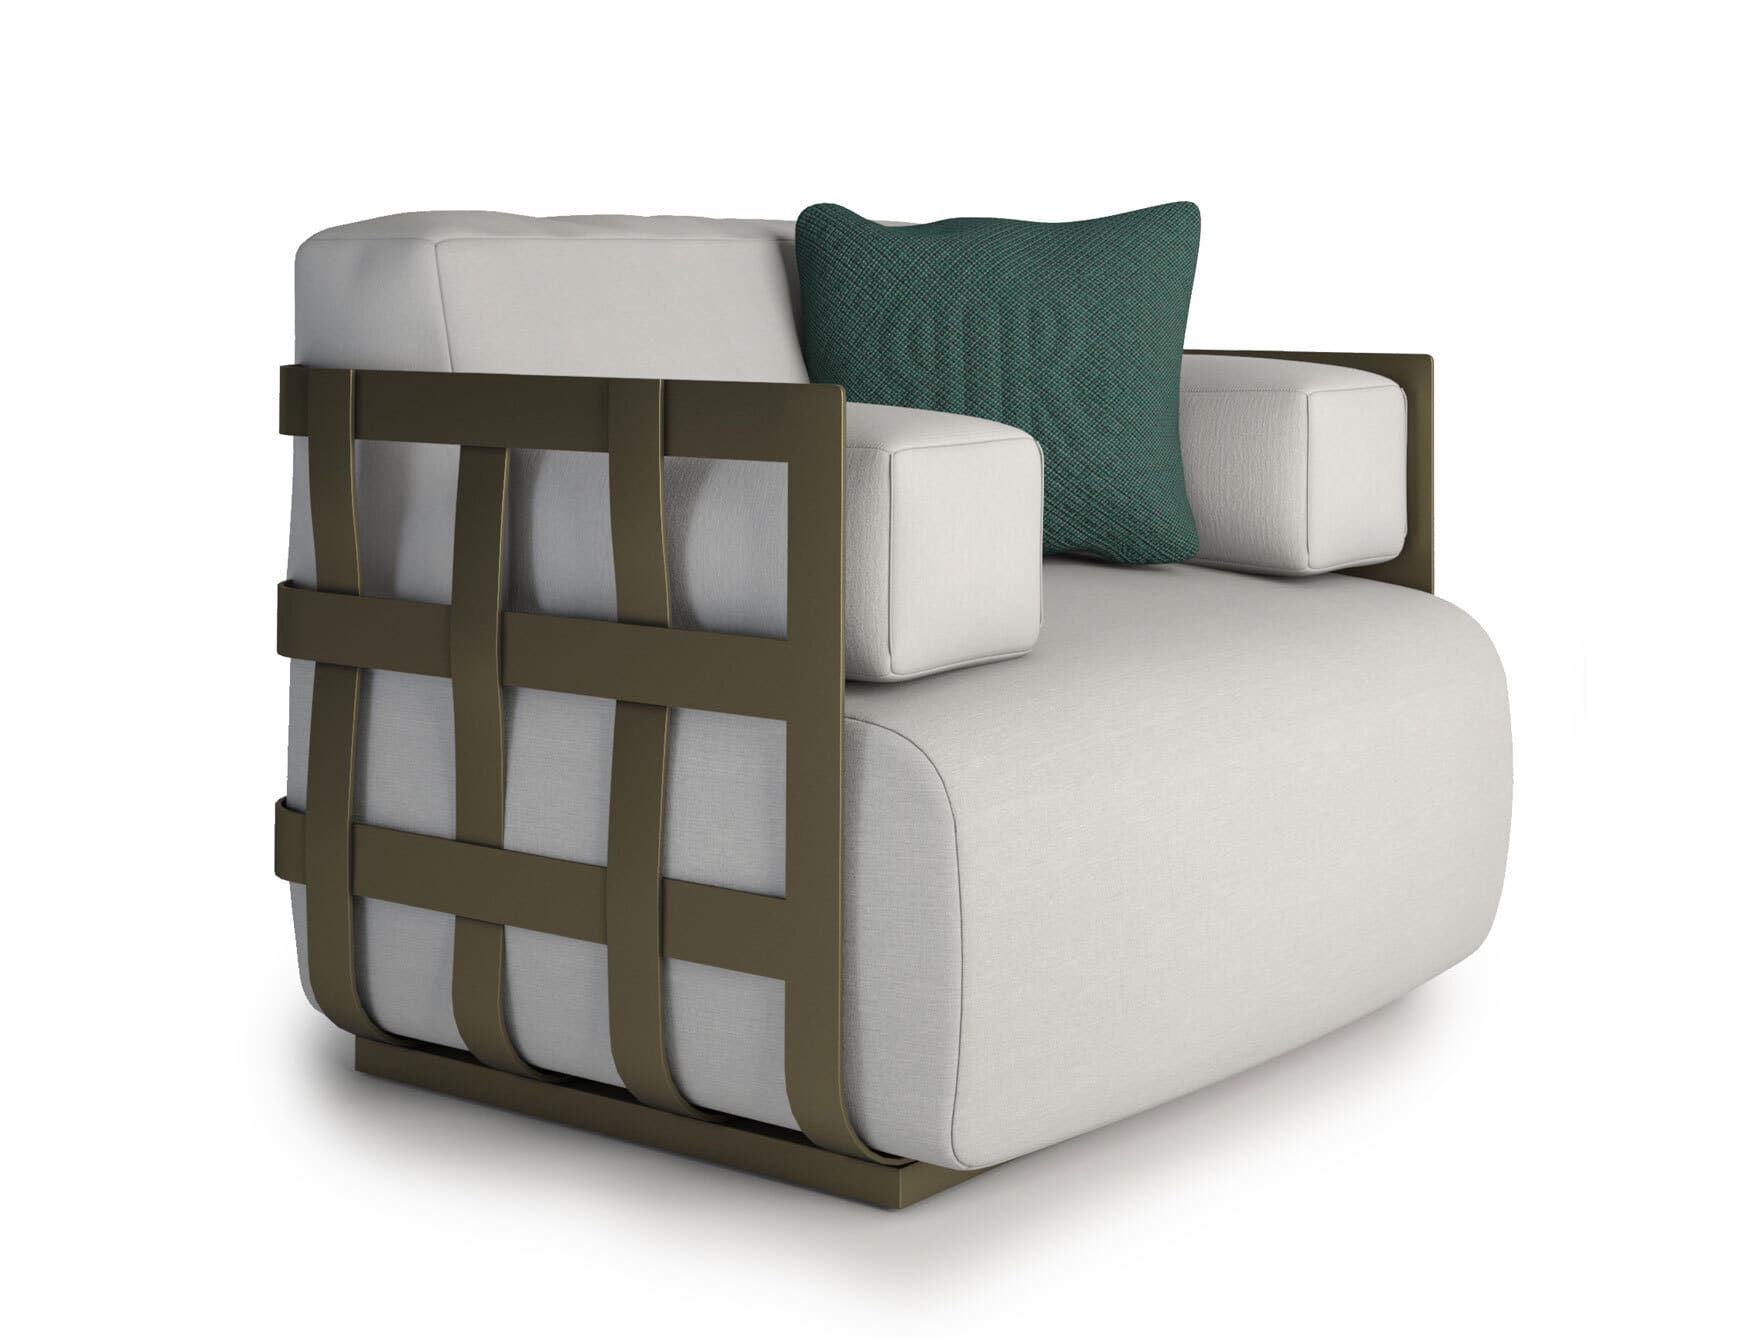 Dafne Poltrona modern luxury sofa chair with white fabric